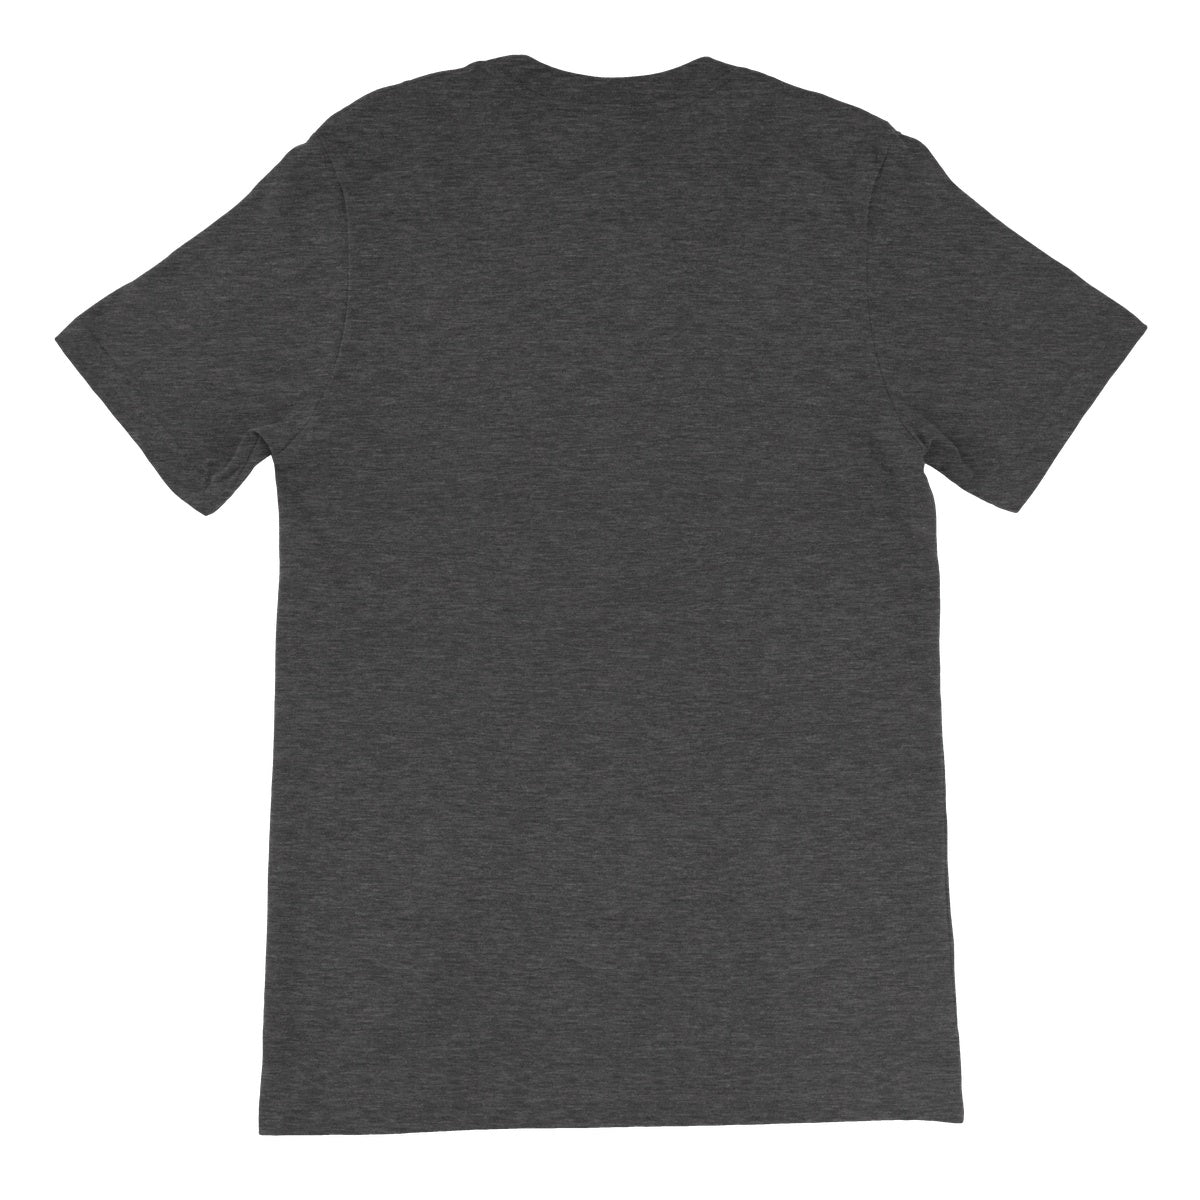 Complex Squaring Unisex Short Sleeve T-Shirt